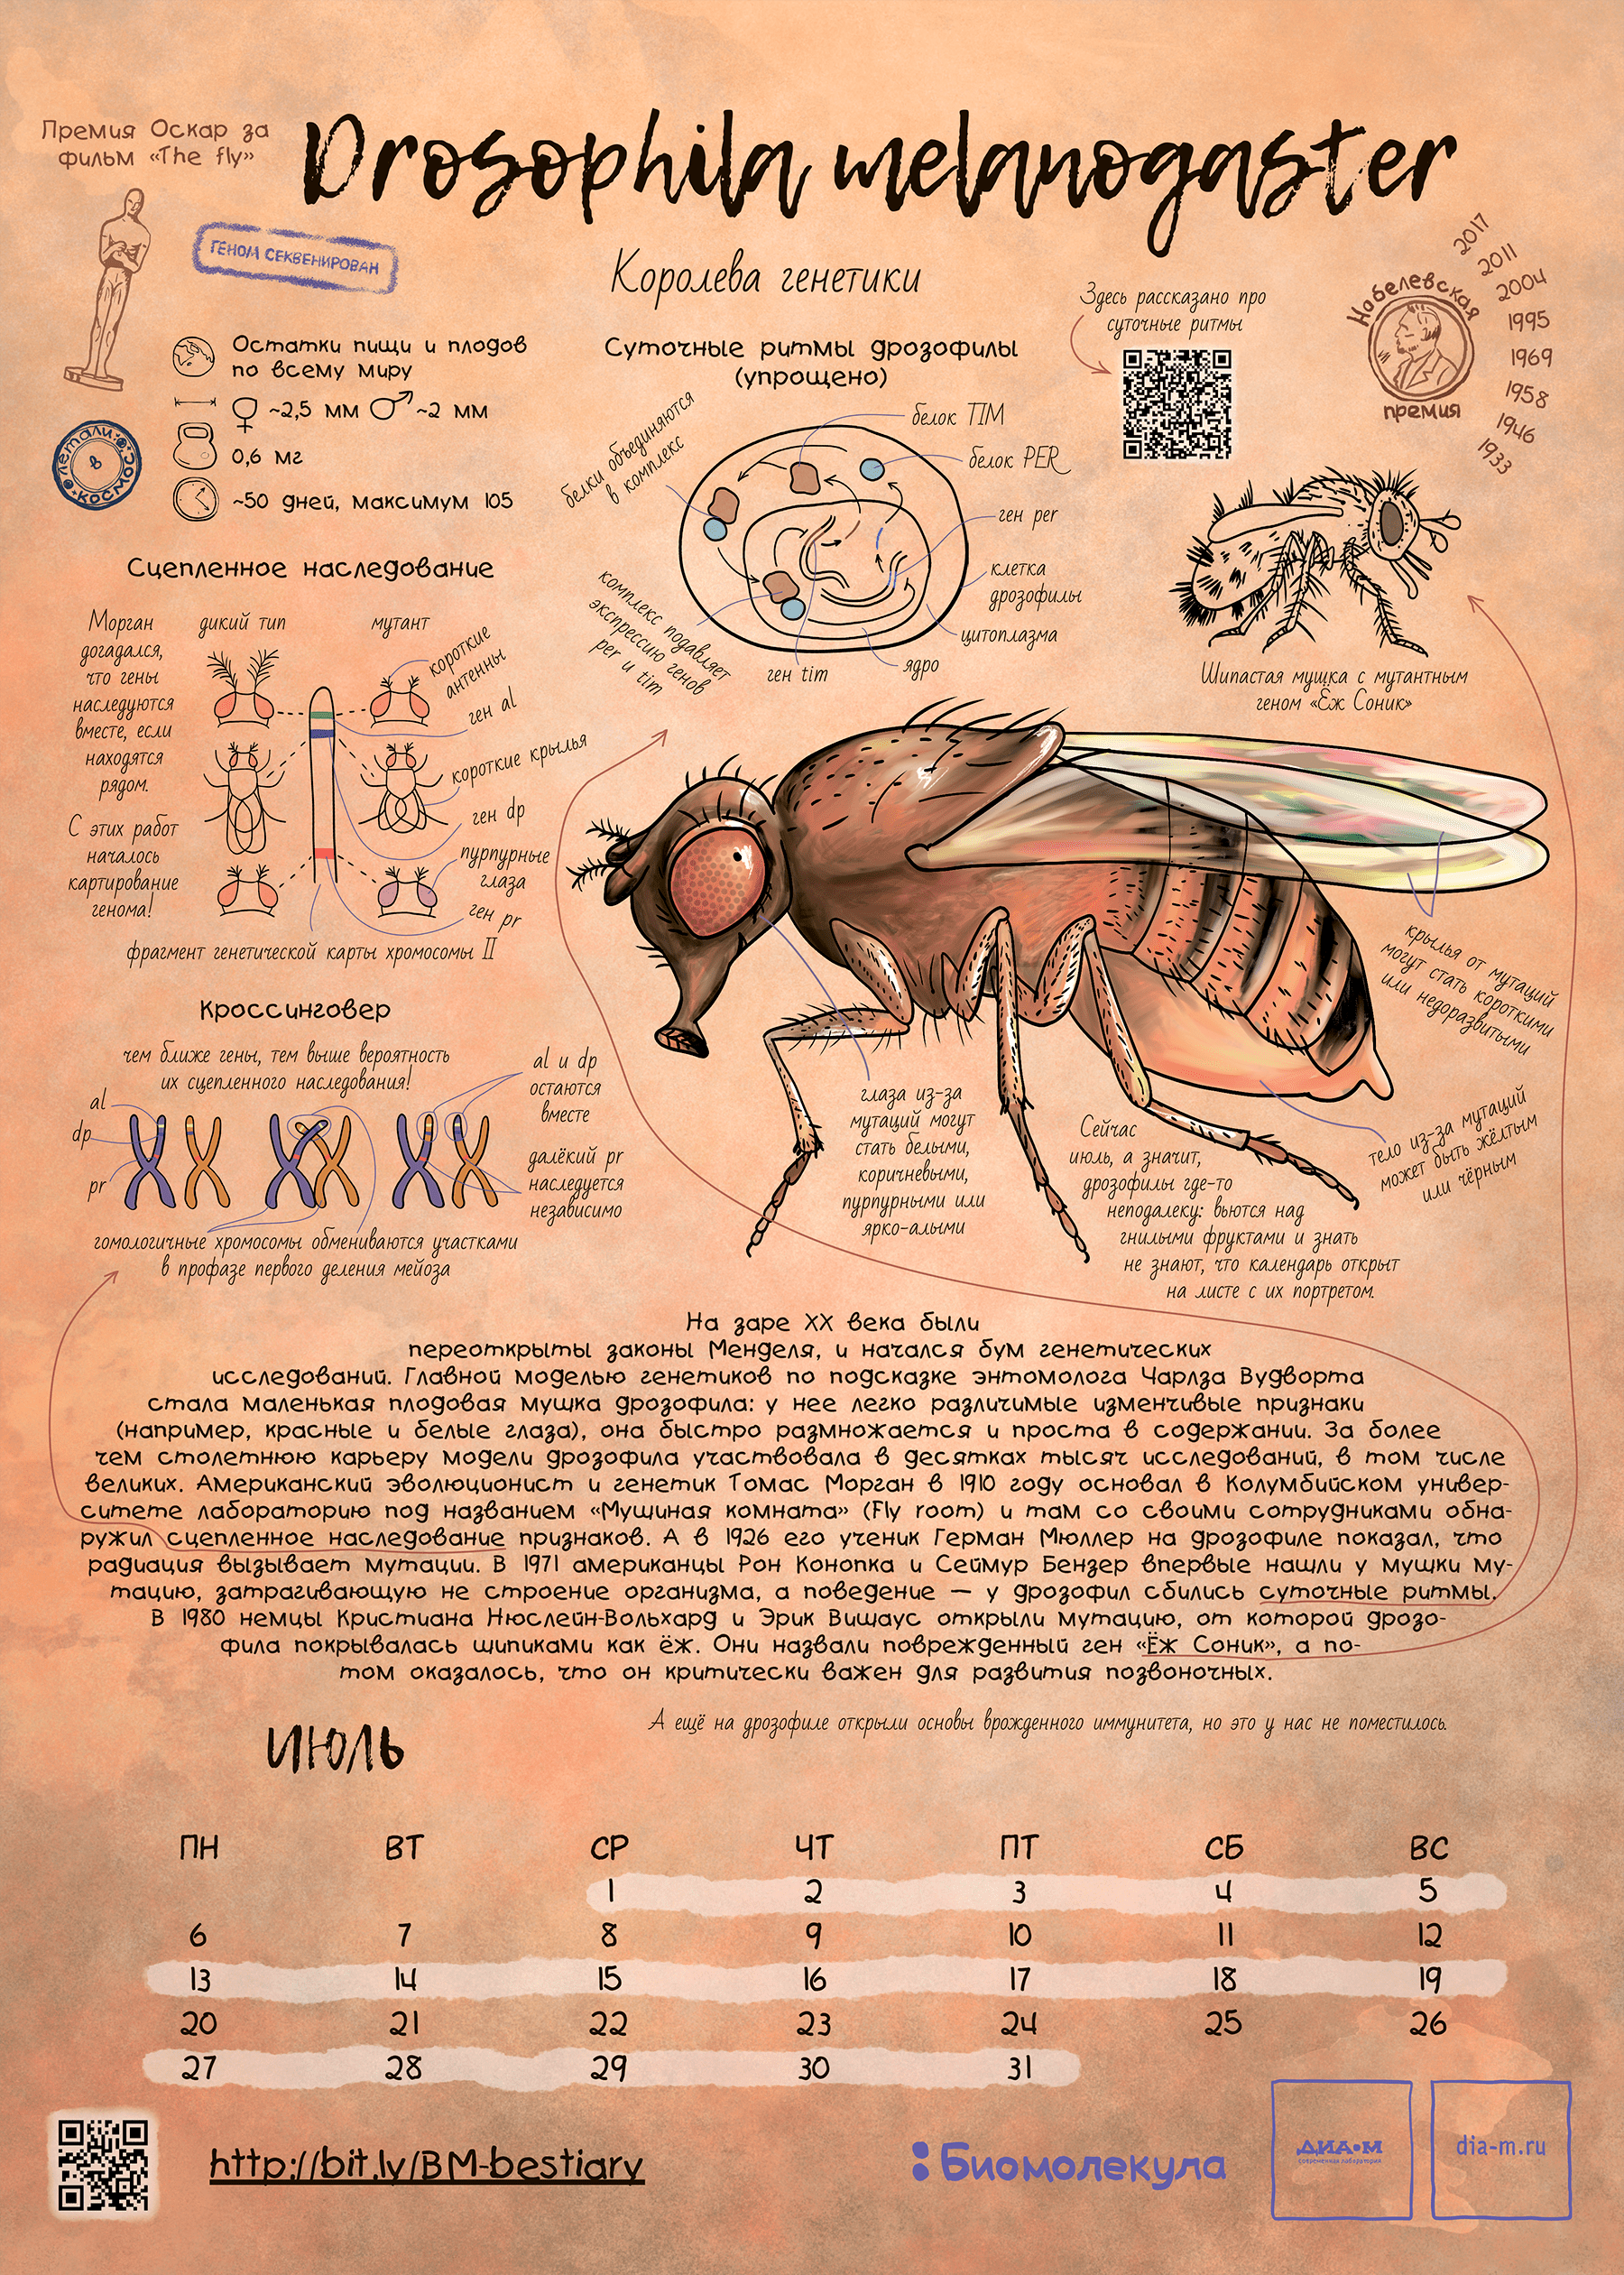 Drosophila melanogaster — герой календаря «Биомолекулы»